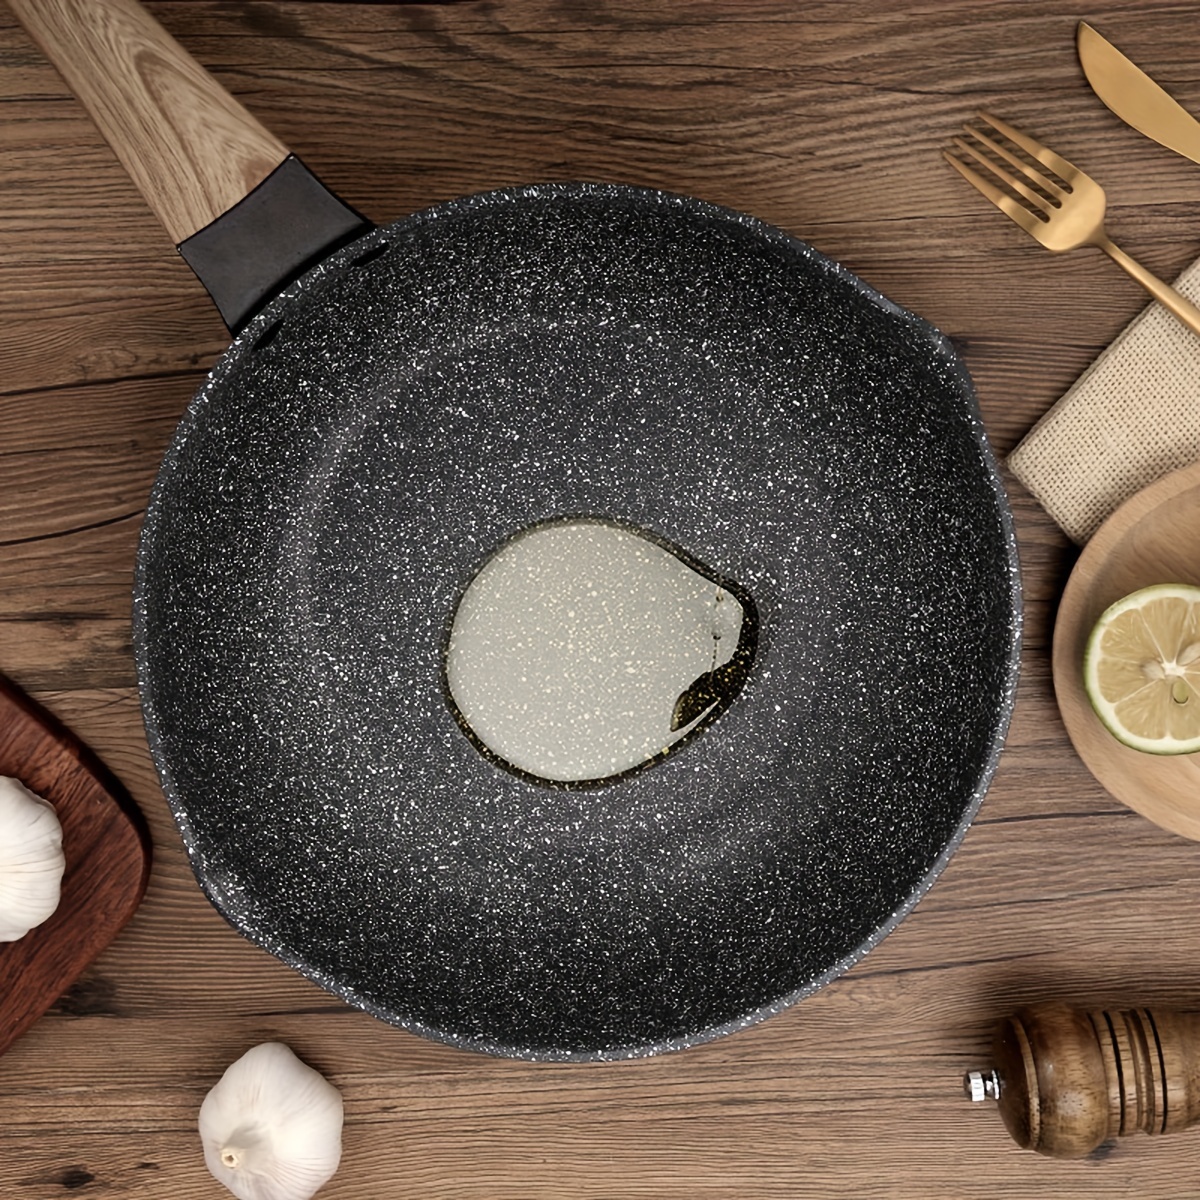 Carote Nonstick Deep Frying Pan,Deep Skillet Stone Cookware Granite Coating  from Switzerland,11-Inch,Black